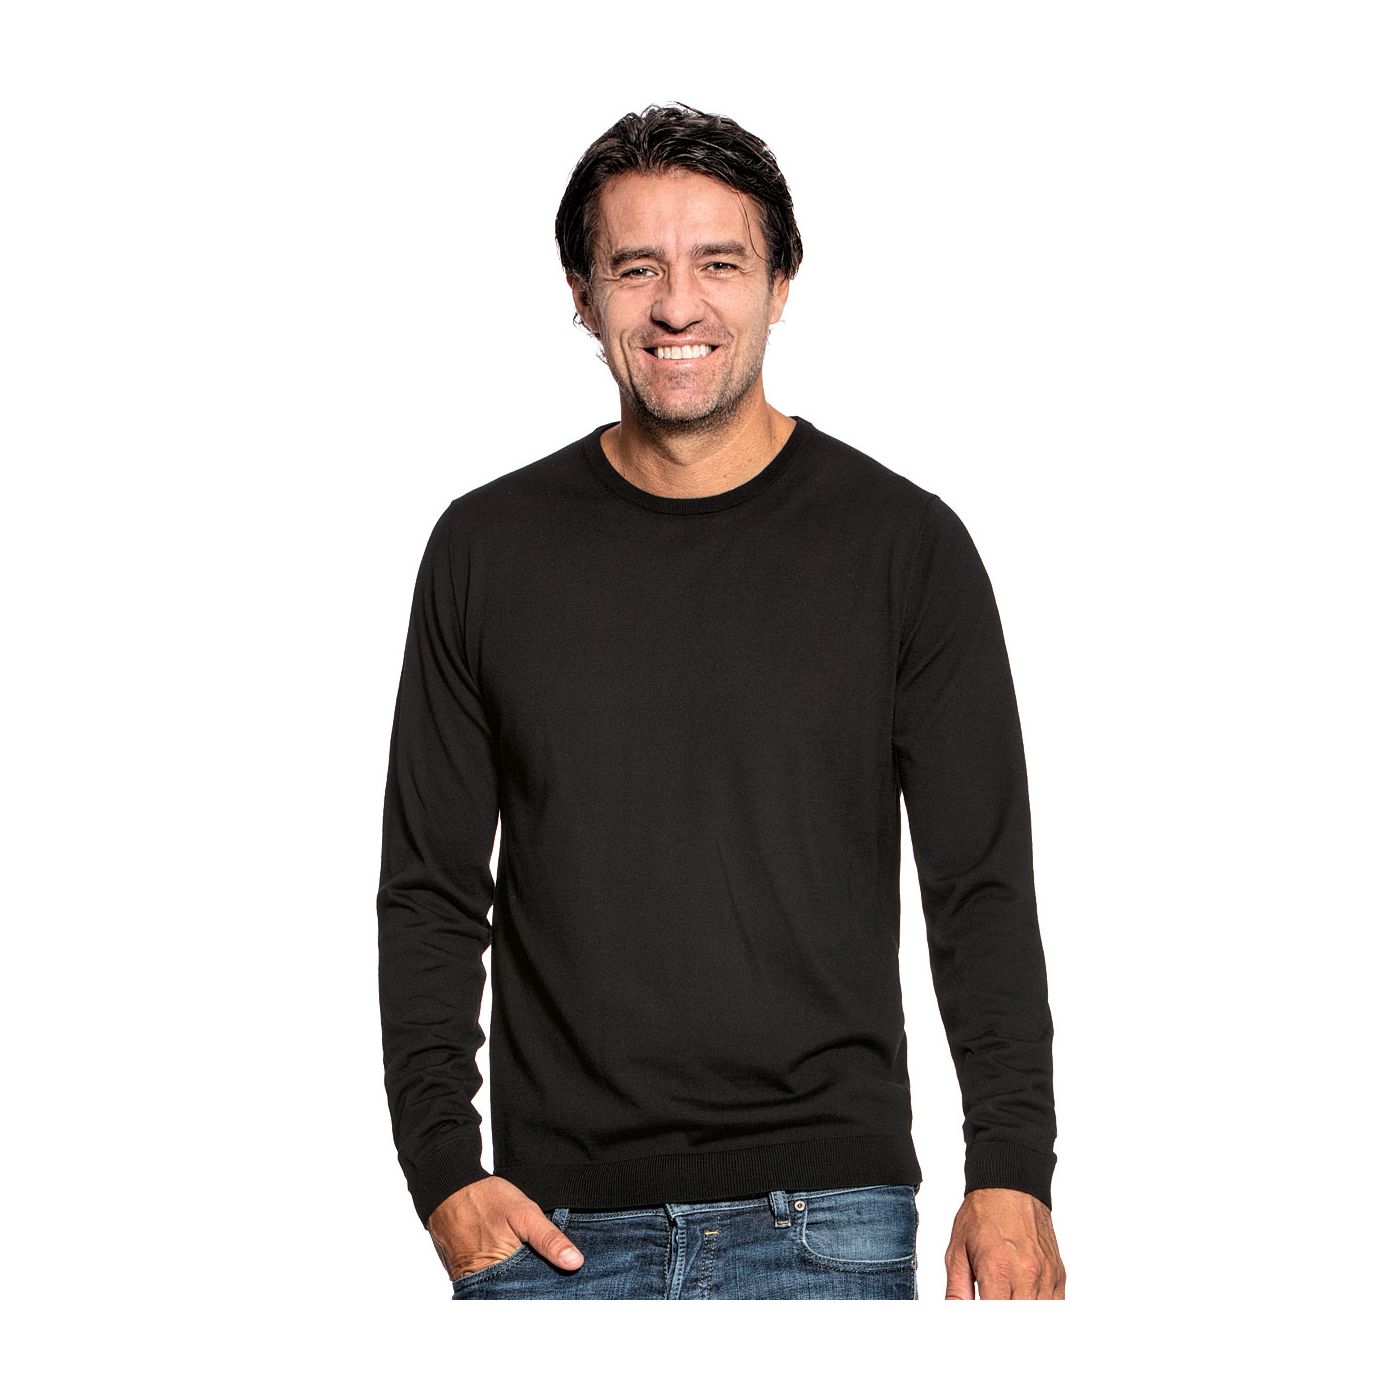 Crew neck sweater for men made of Merino wool in Black